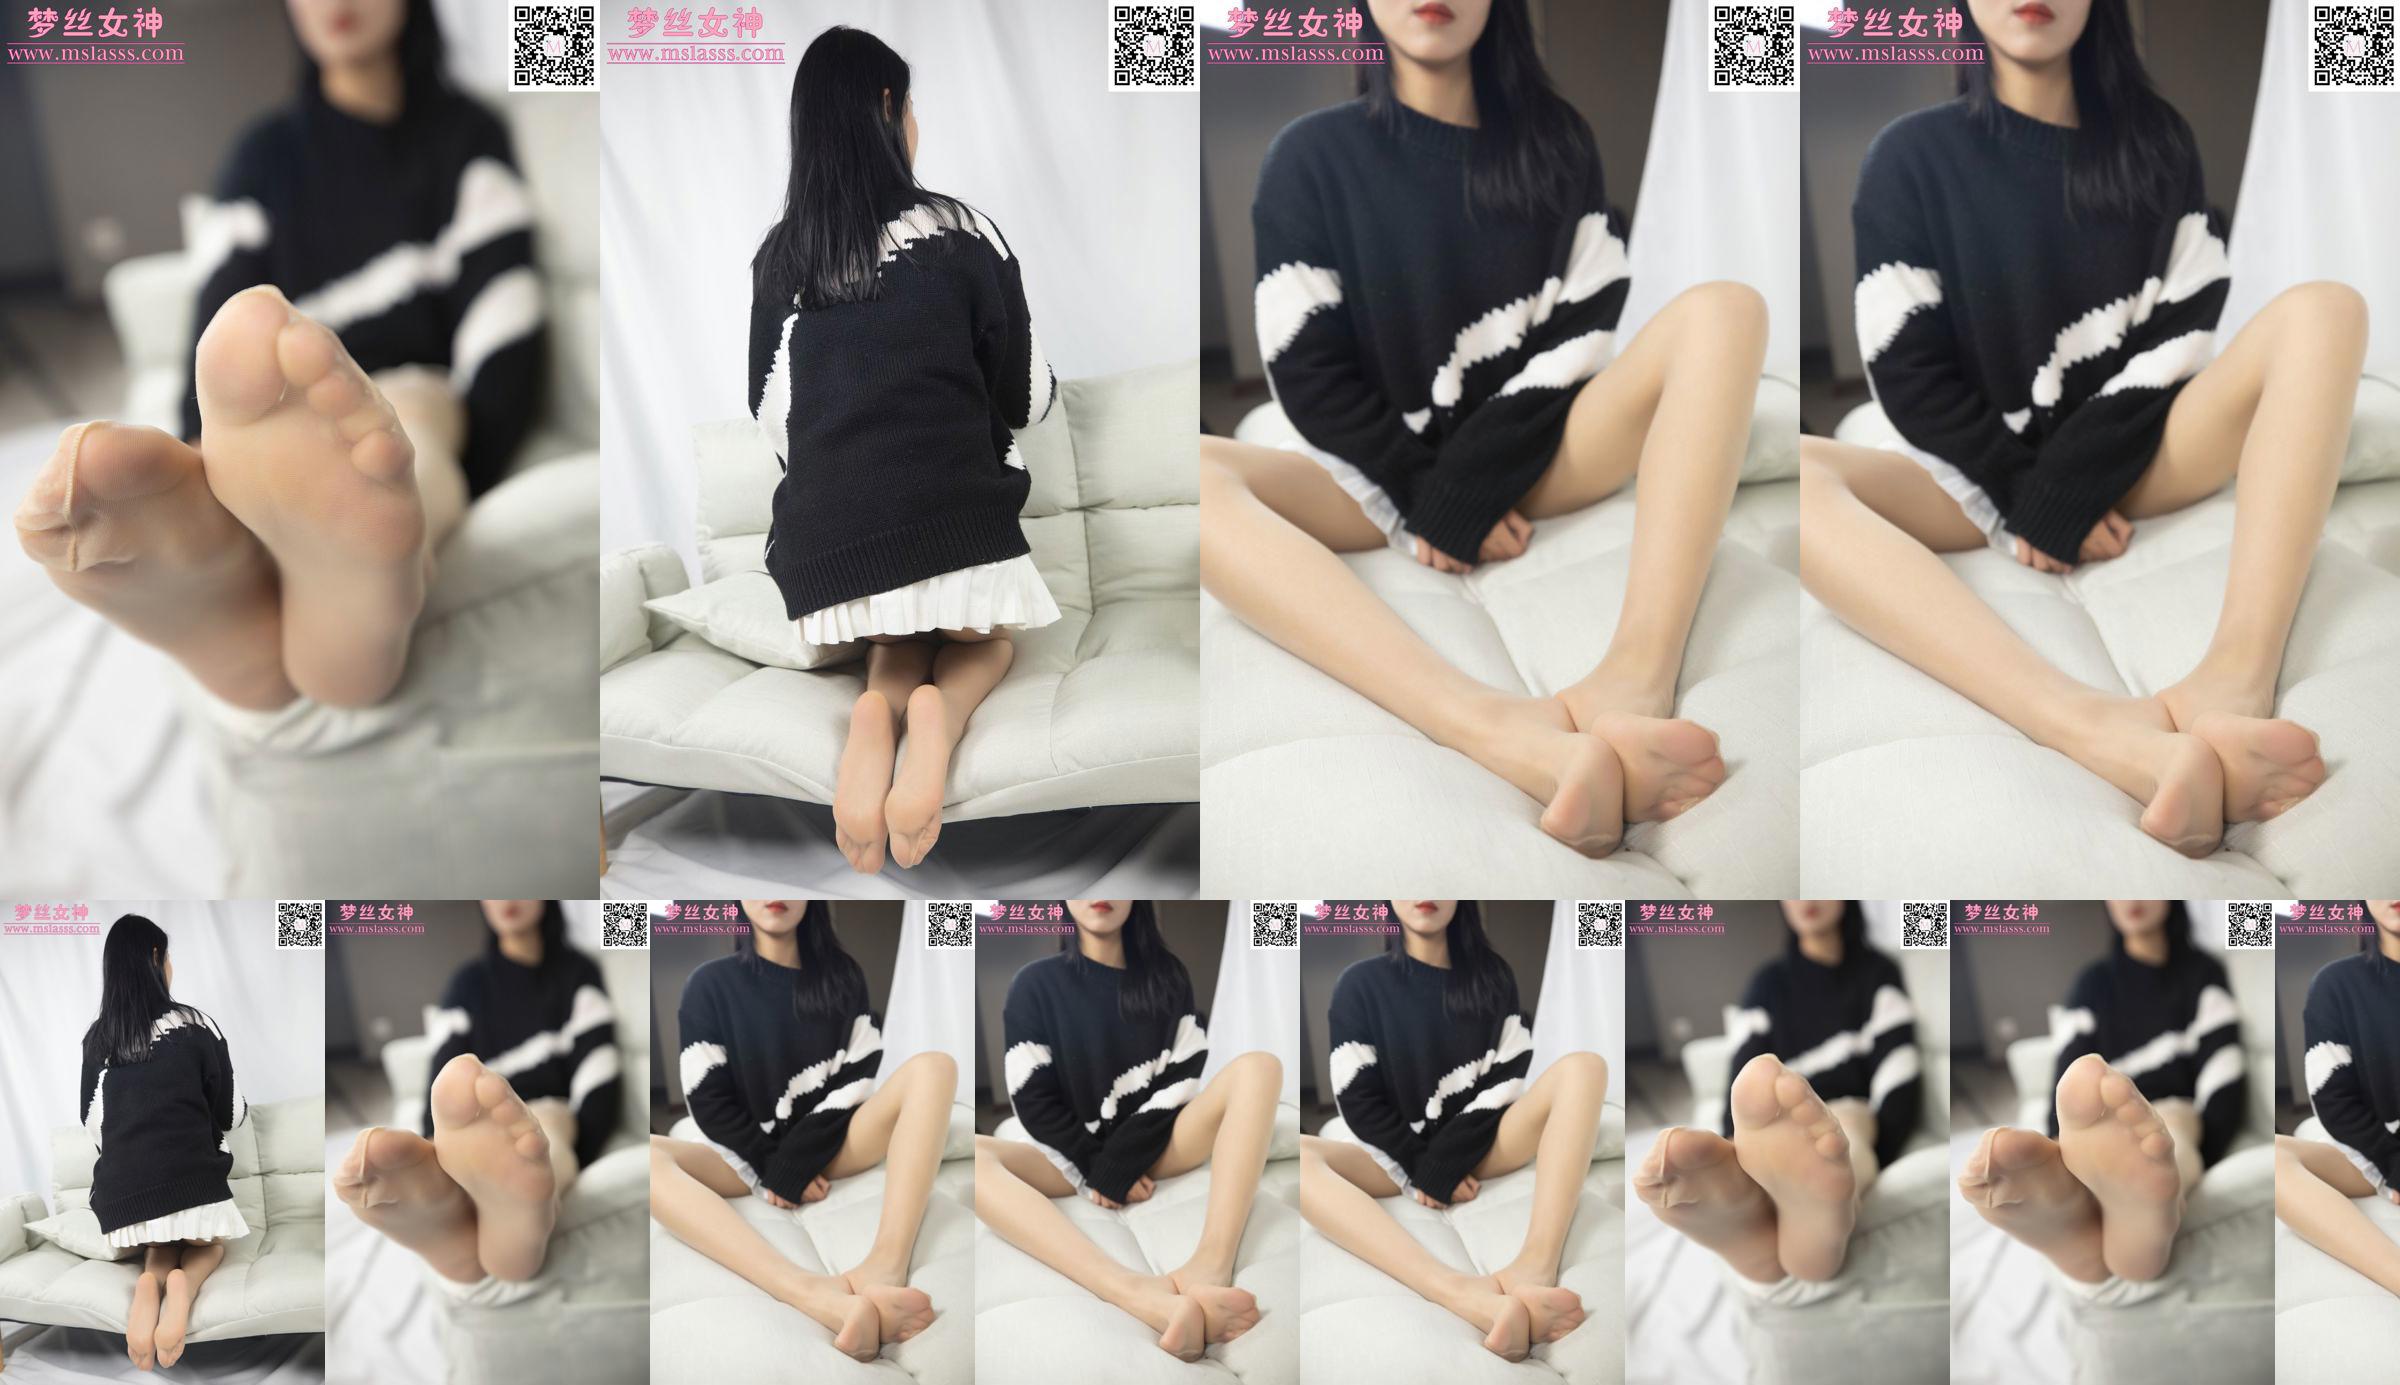 [Goddess of Dreams MSLASS] Xiaomi's trui kan haar lange benen niet stoppen No.8a84bd Pagina 34